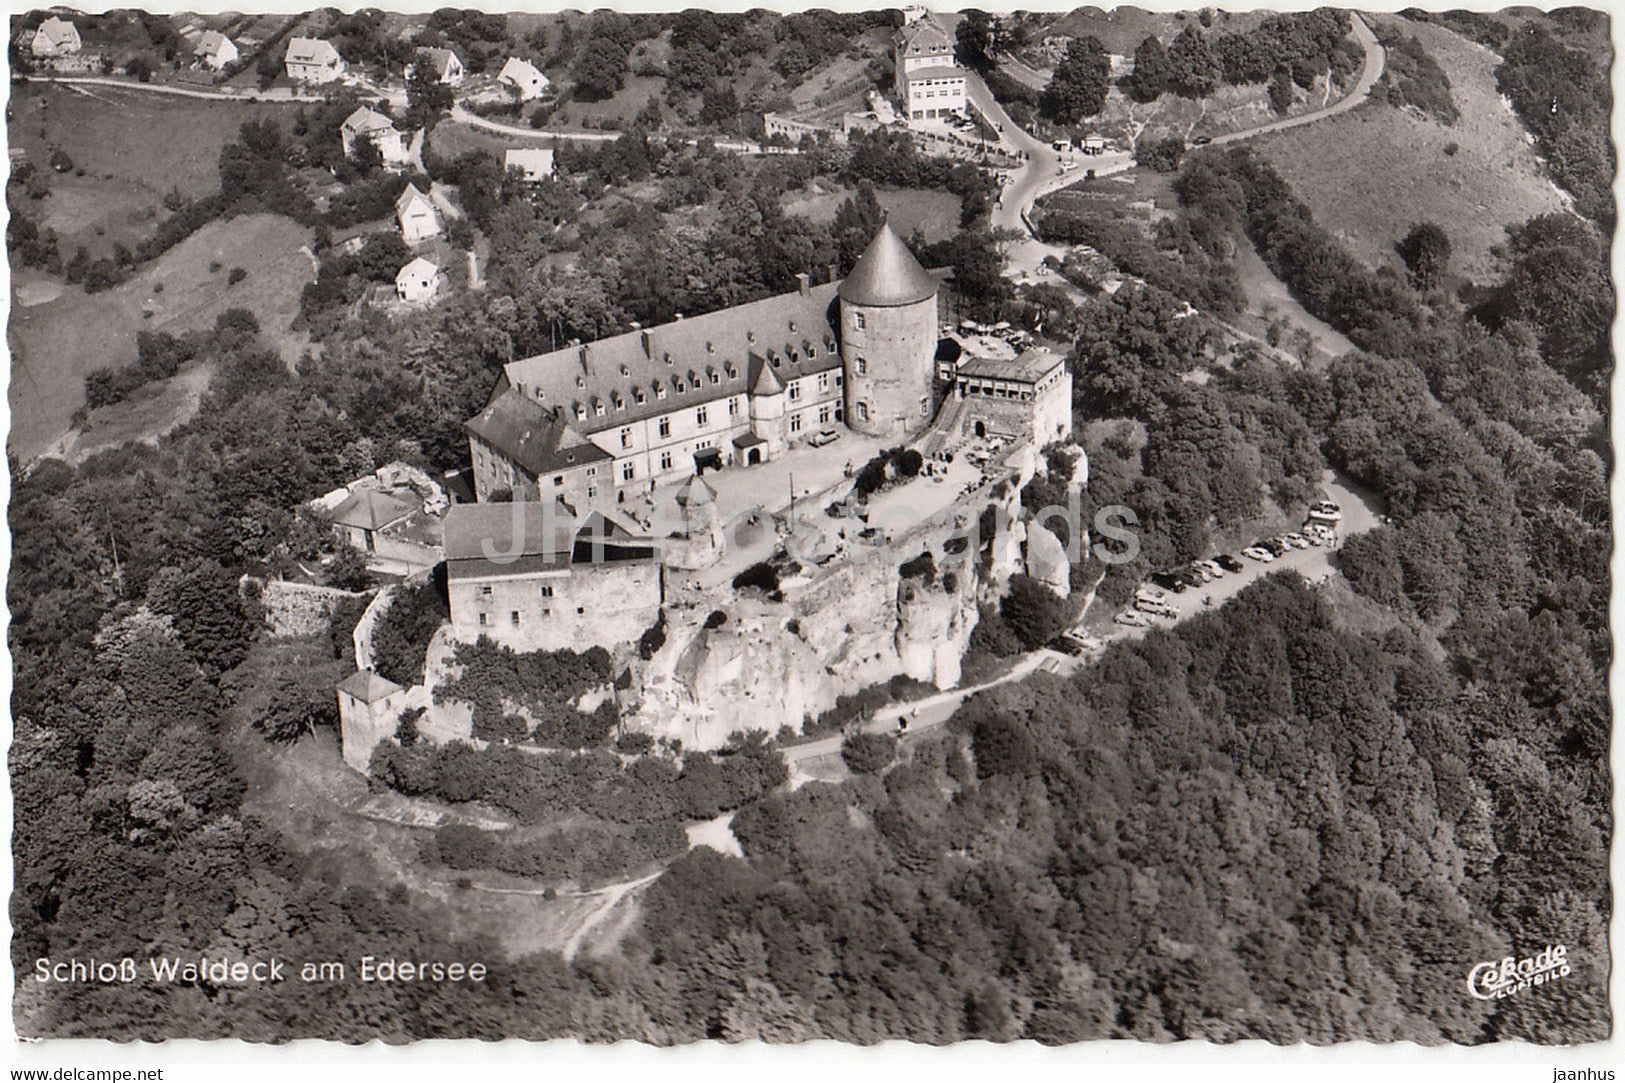 Schloss Waldeck am Edersee - castle - 1958 - Germany - used - JH Postcards